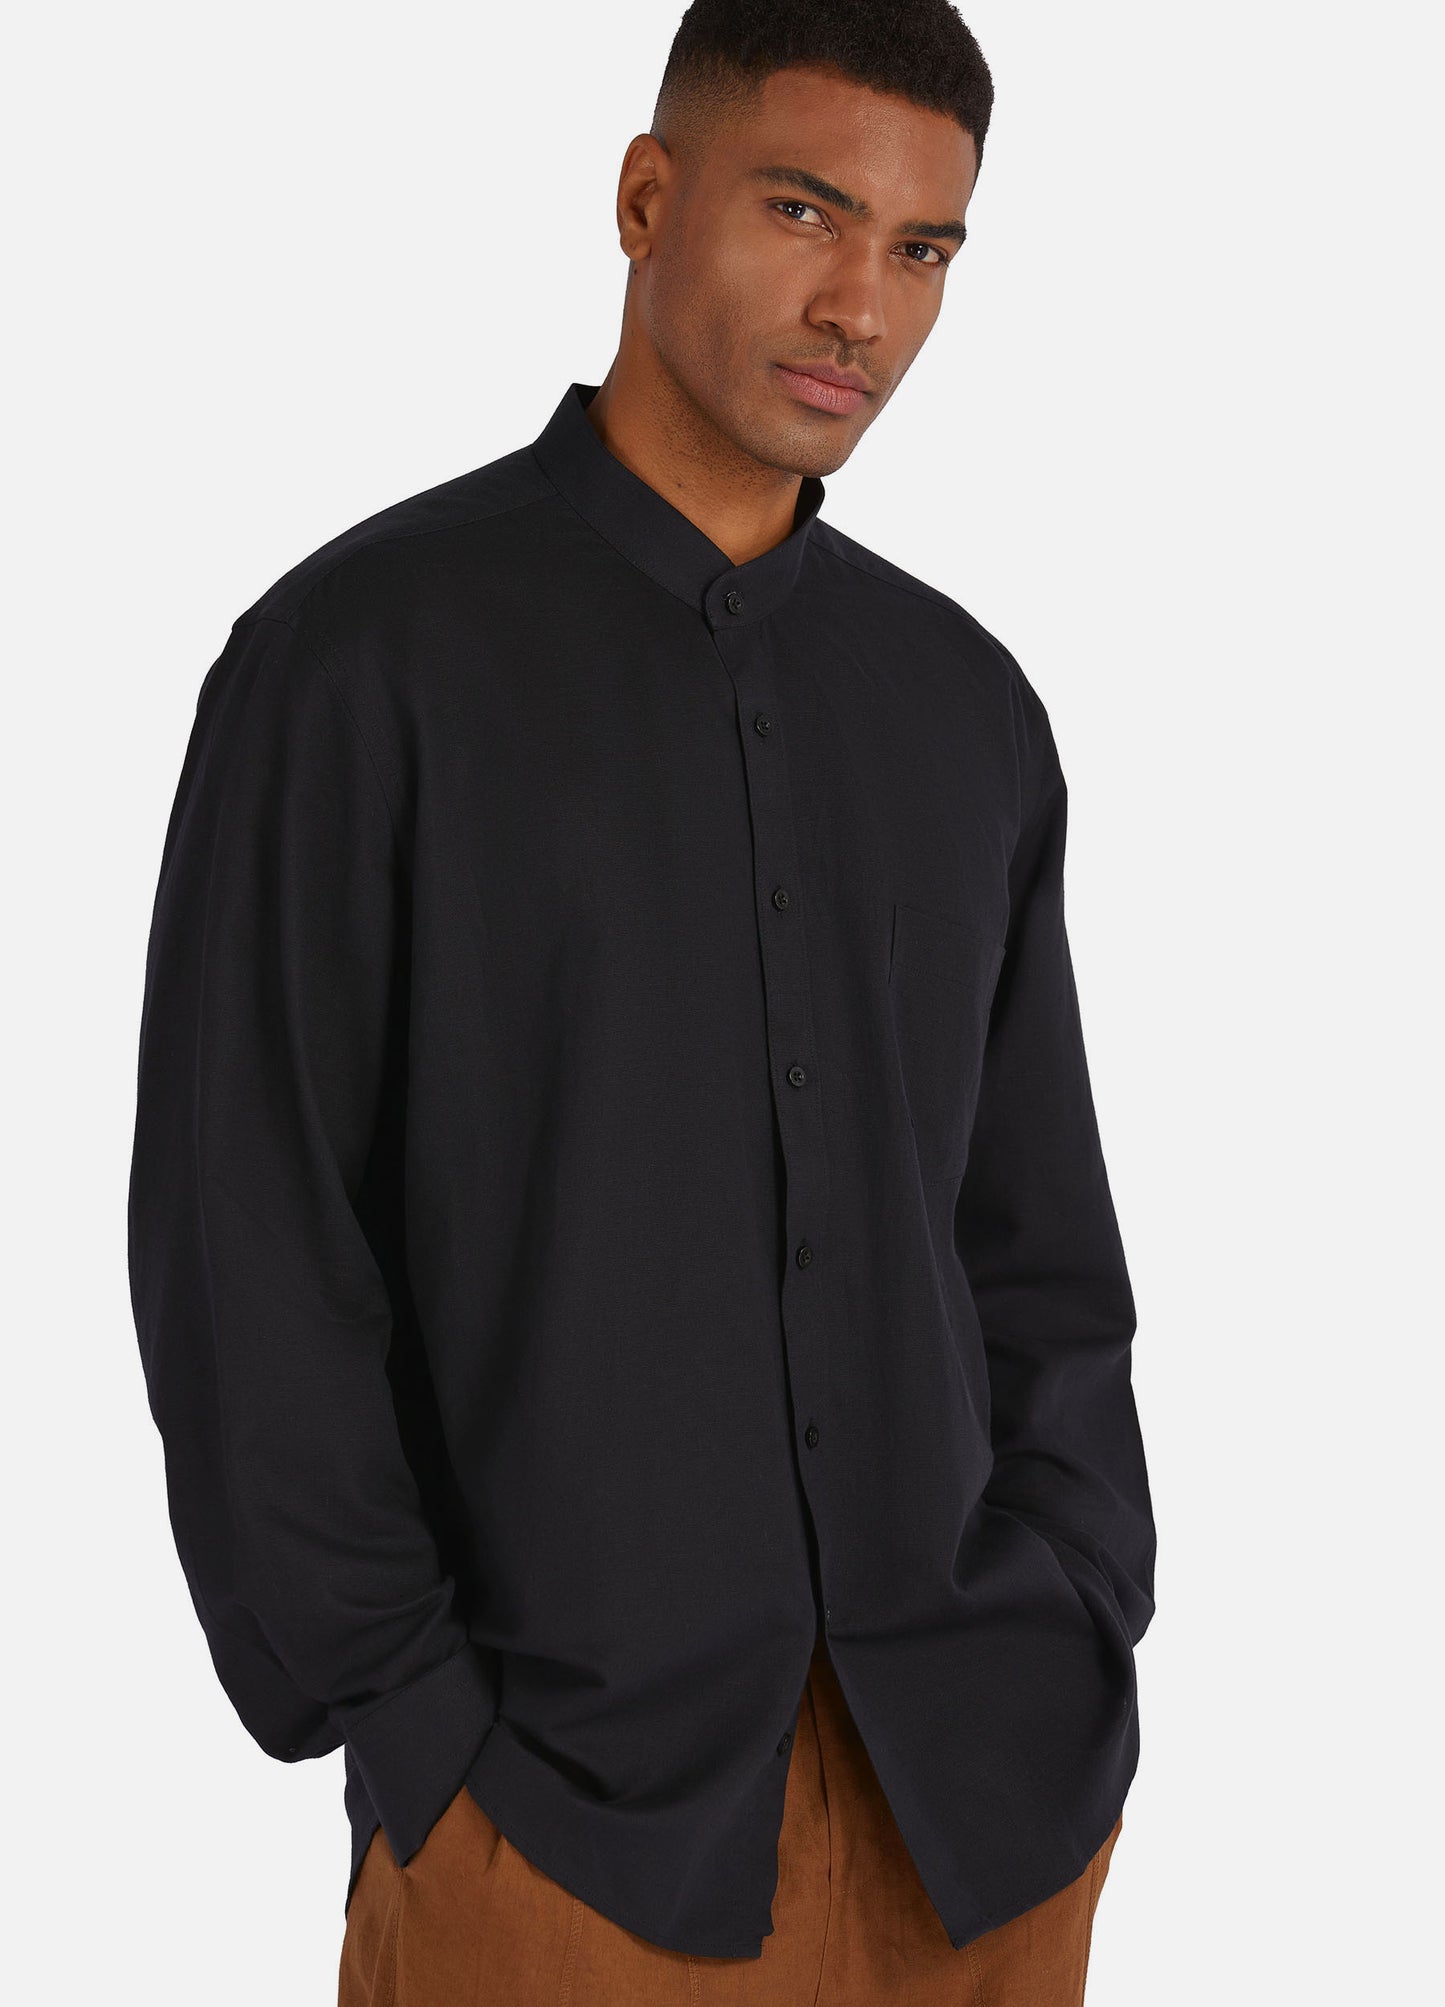 1PA1 Men's 100% Linen Henley Dress Shirts Button Down Plain Casual Shirts